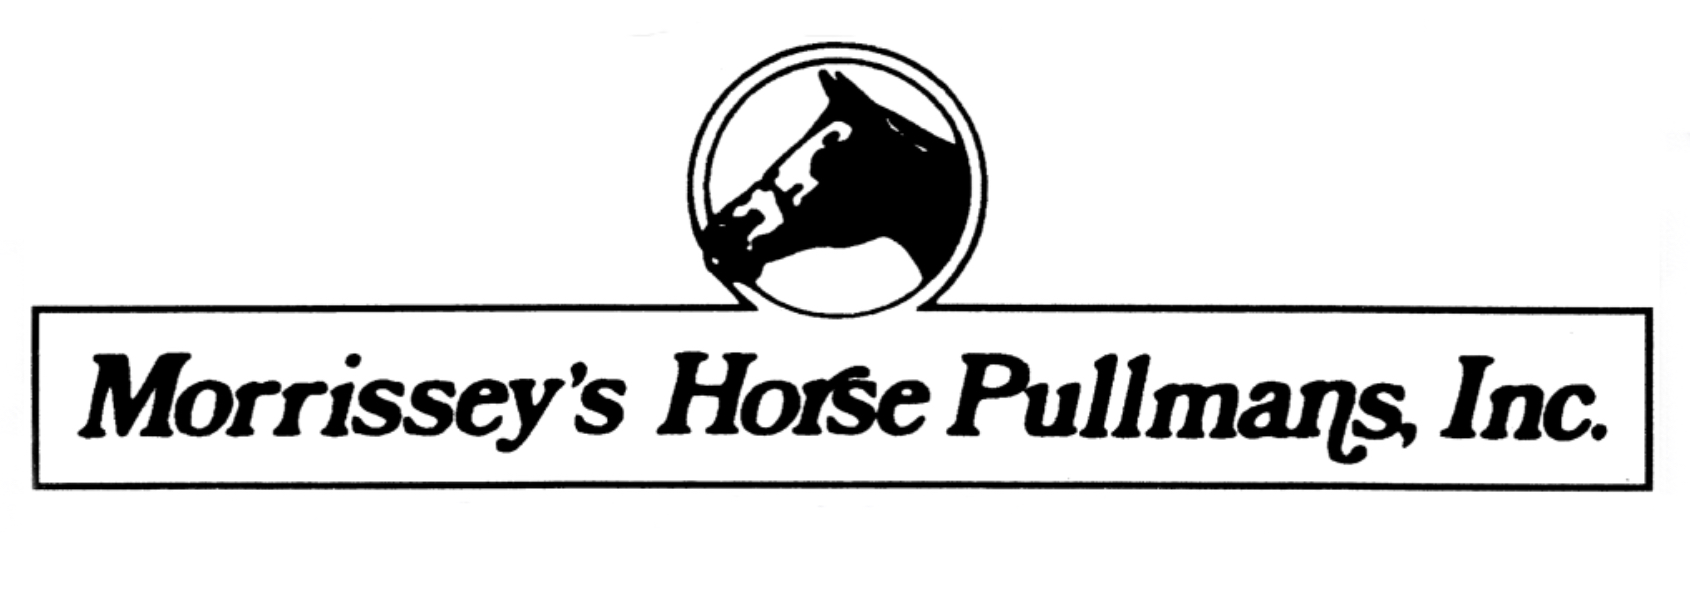 Morrisseys Horse Pullmans, Inc.